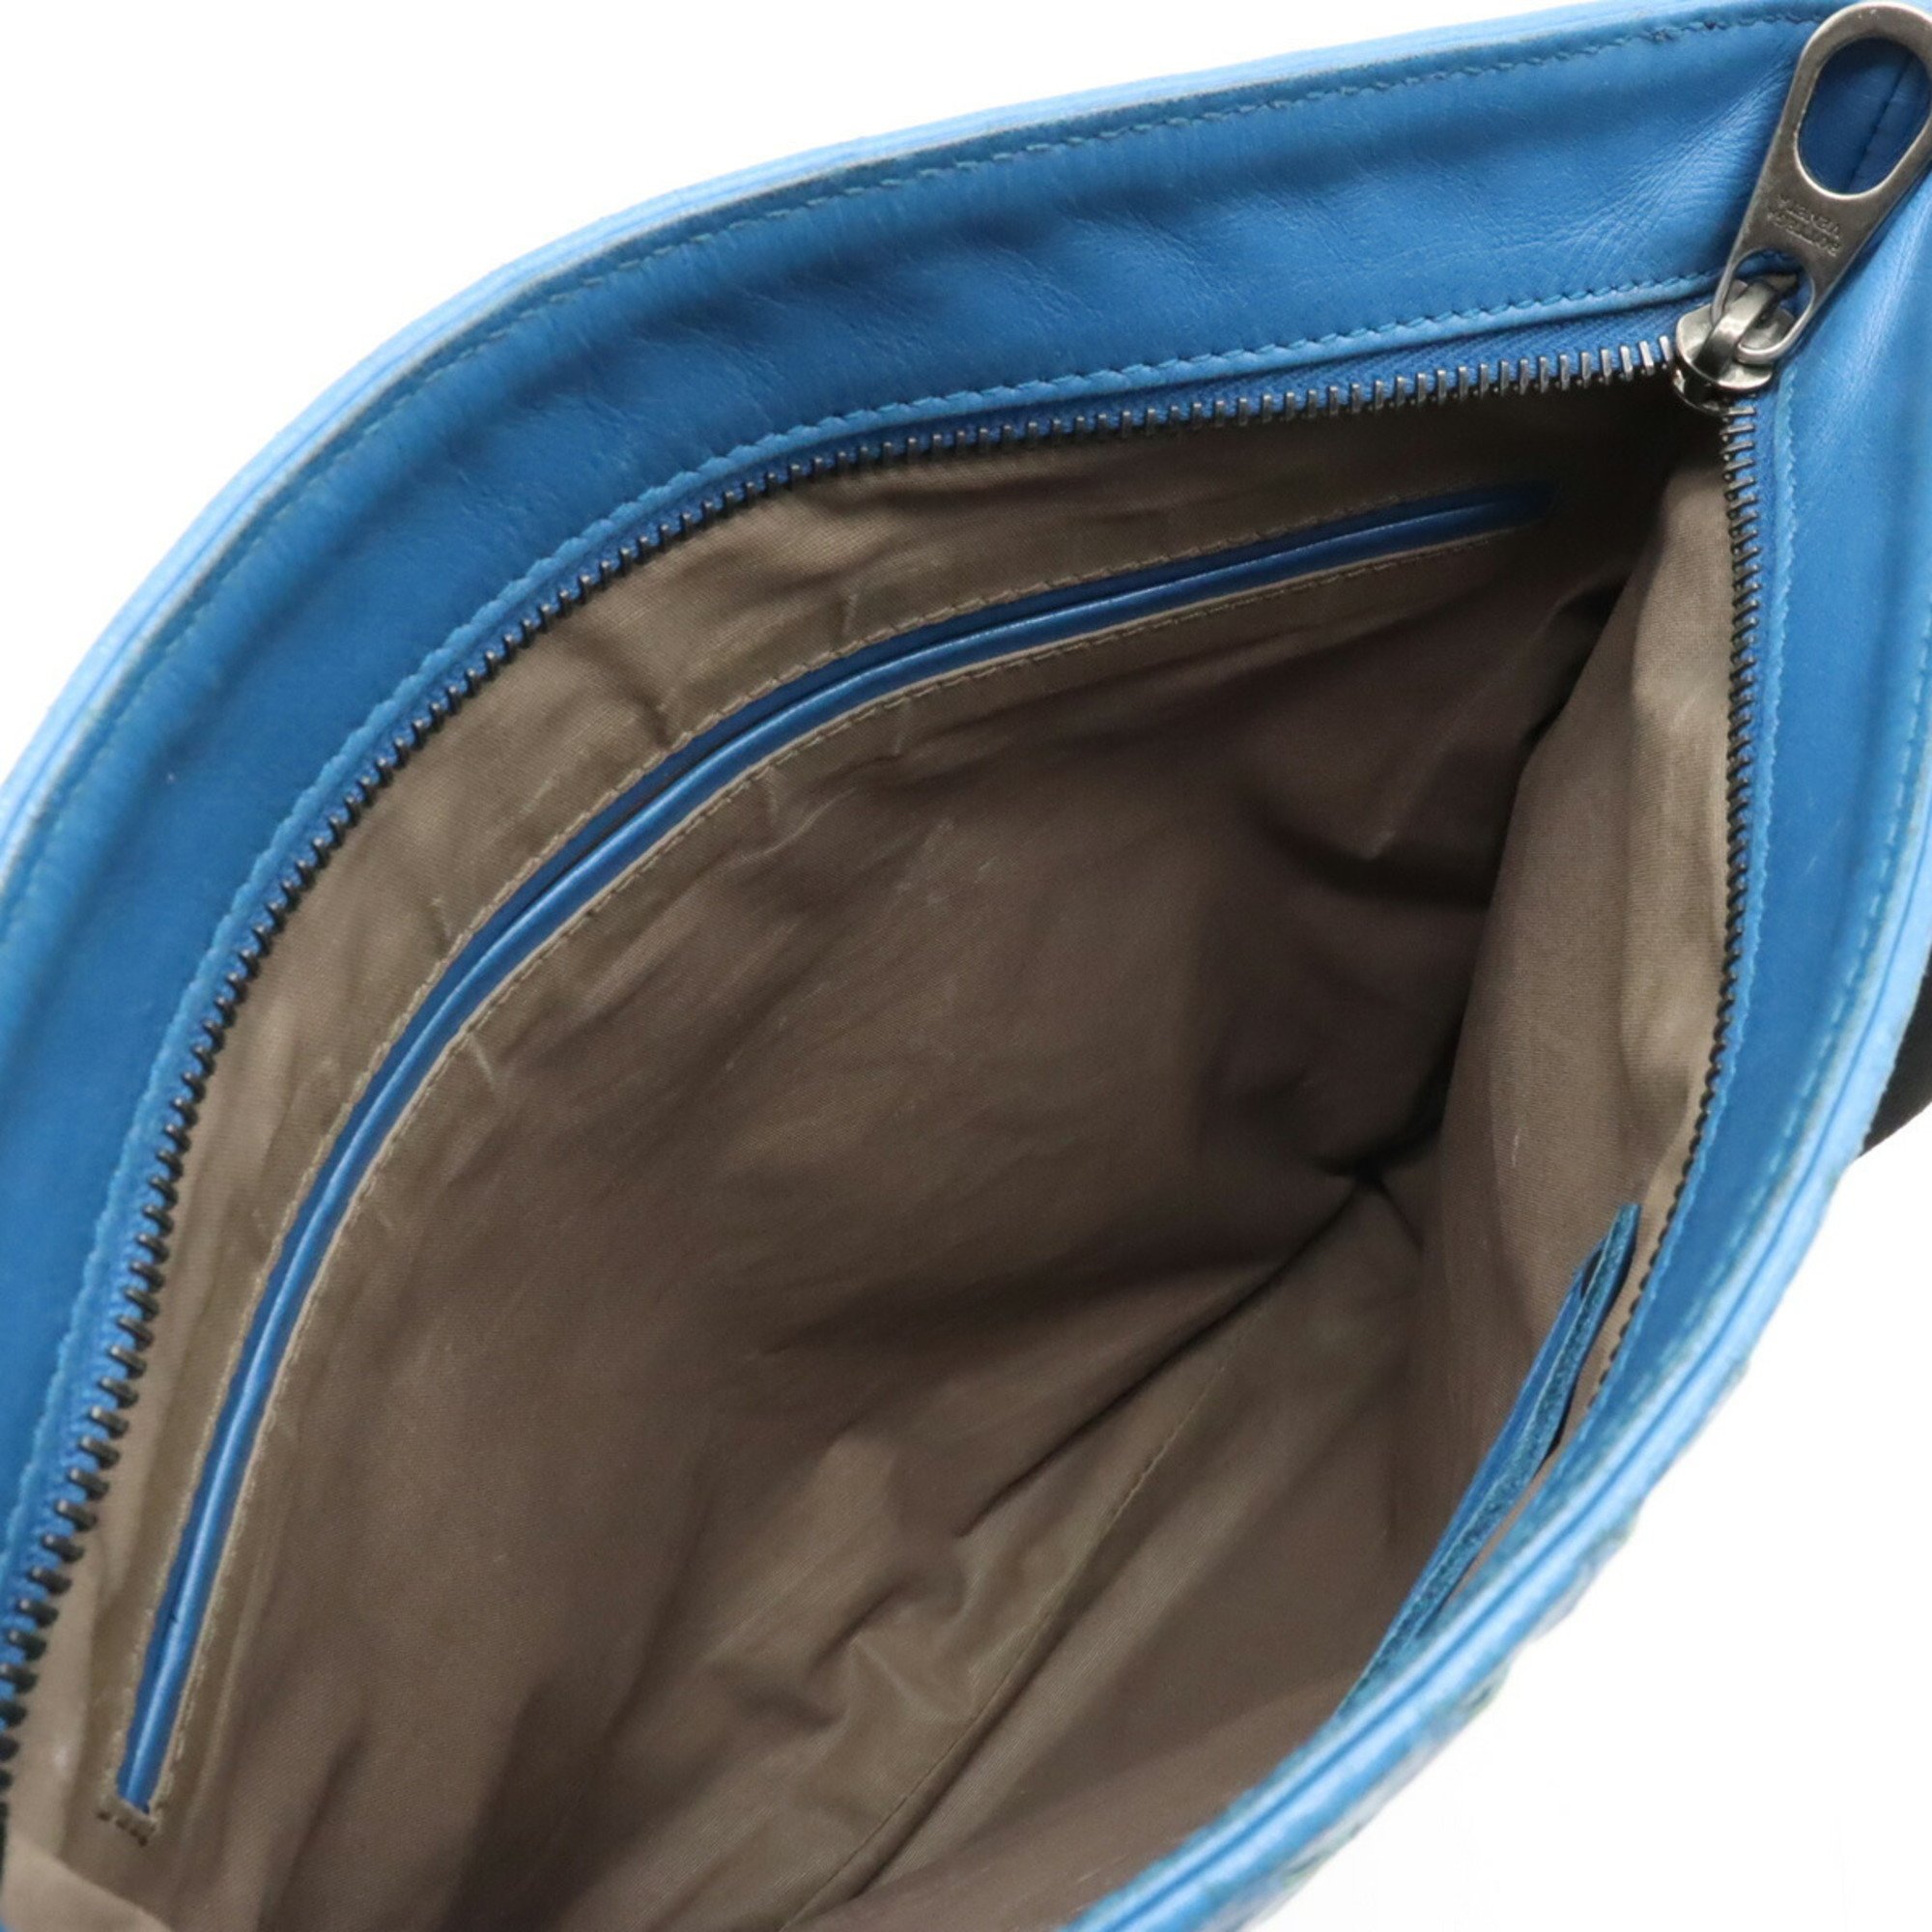 BOTTEGA VENETA Bottega Veneta Intrecciato Shoulder Bag Leather Blue 276357